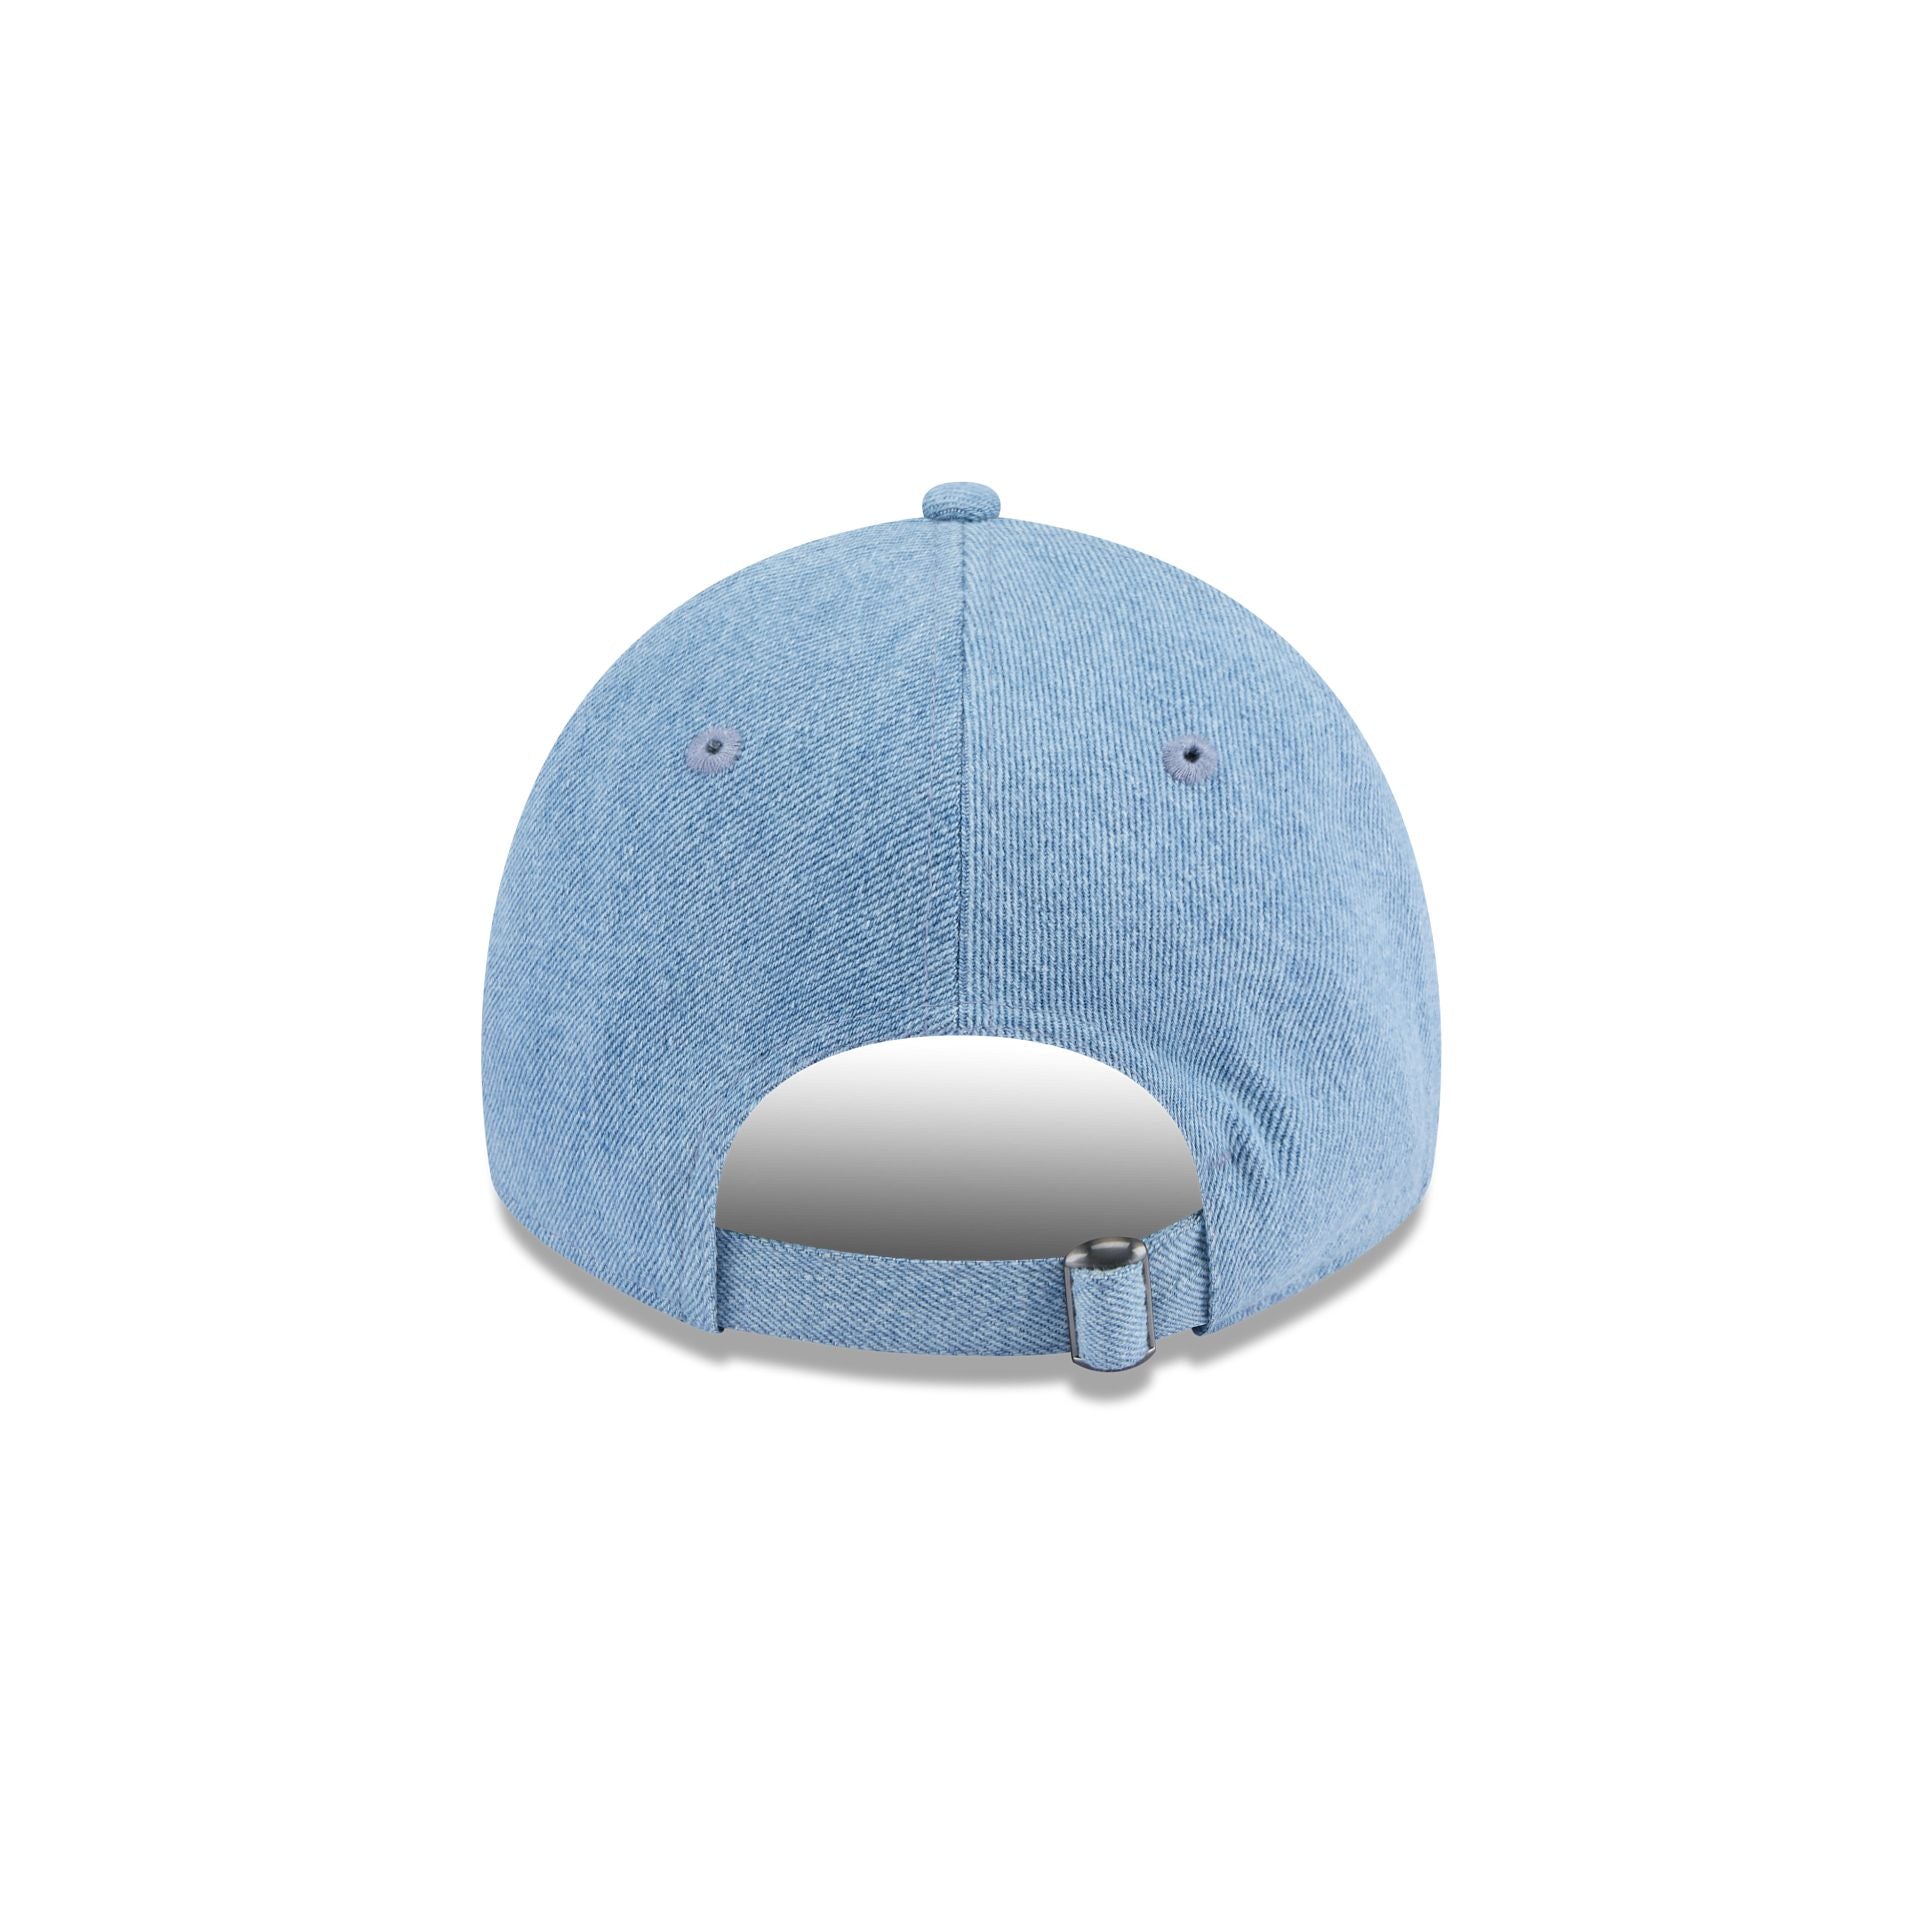 San Francisco Giants Washed Denim 9TWENTY Adjustable Hat, Blue, MLB by New Era